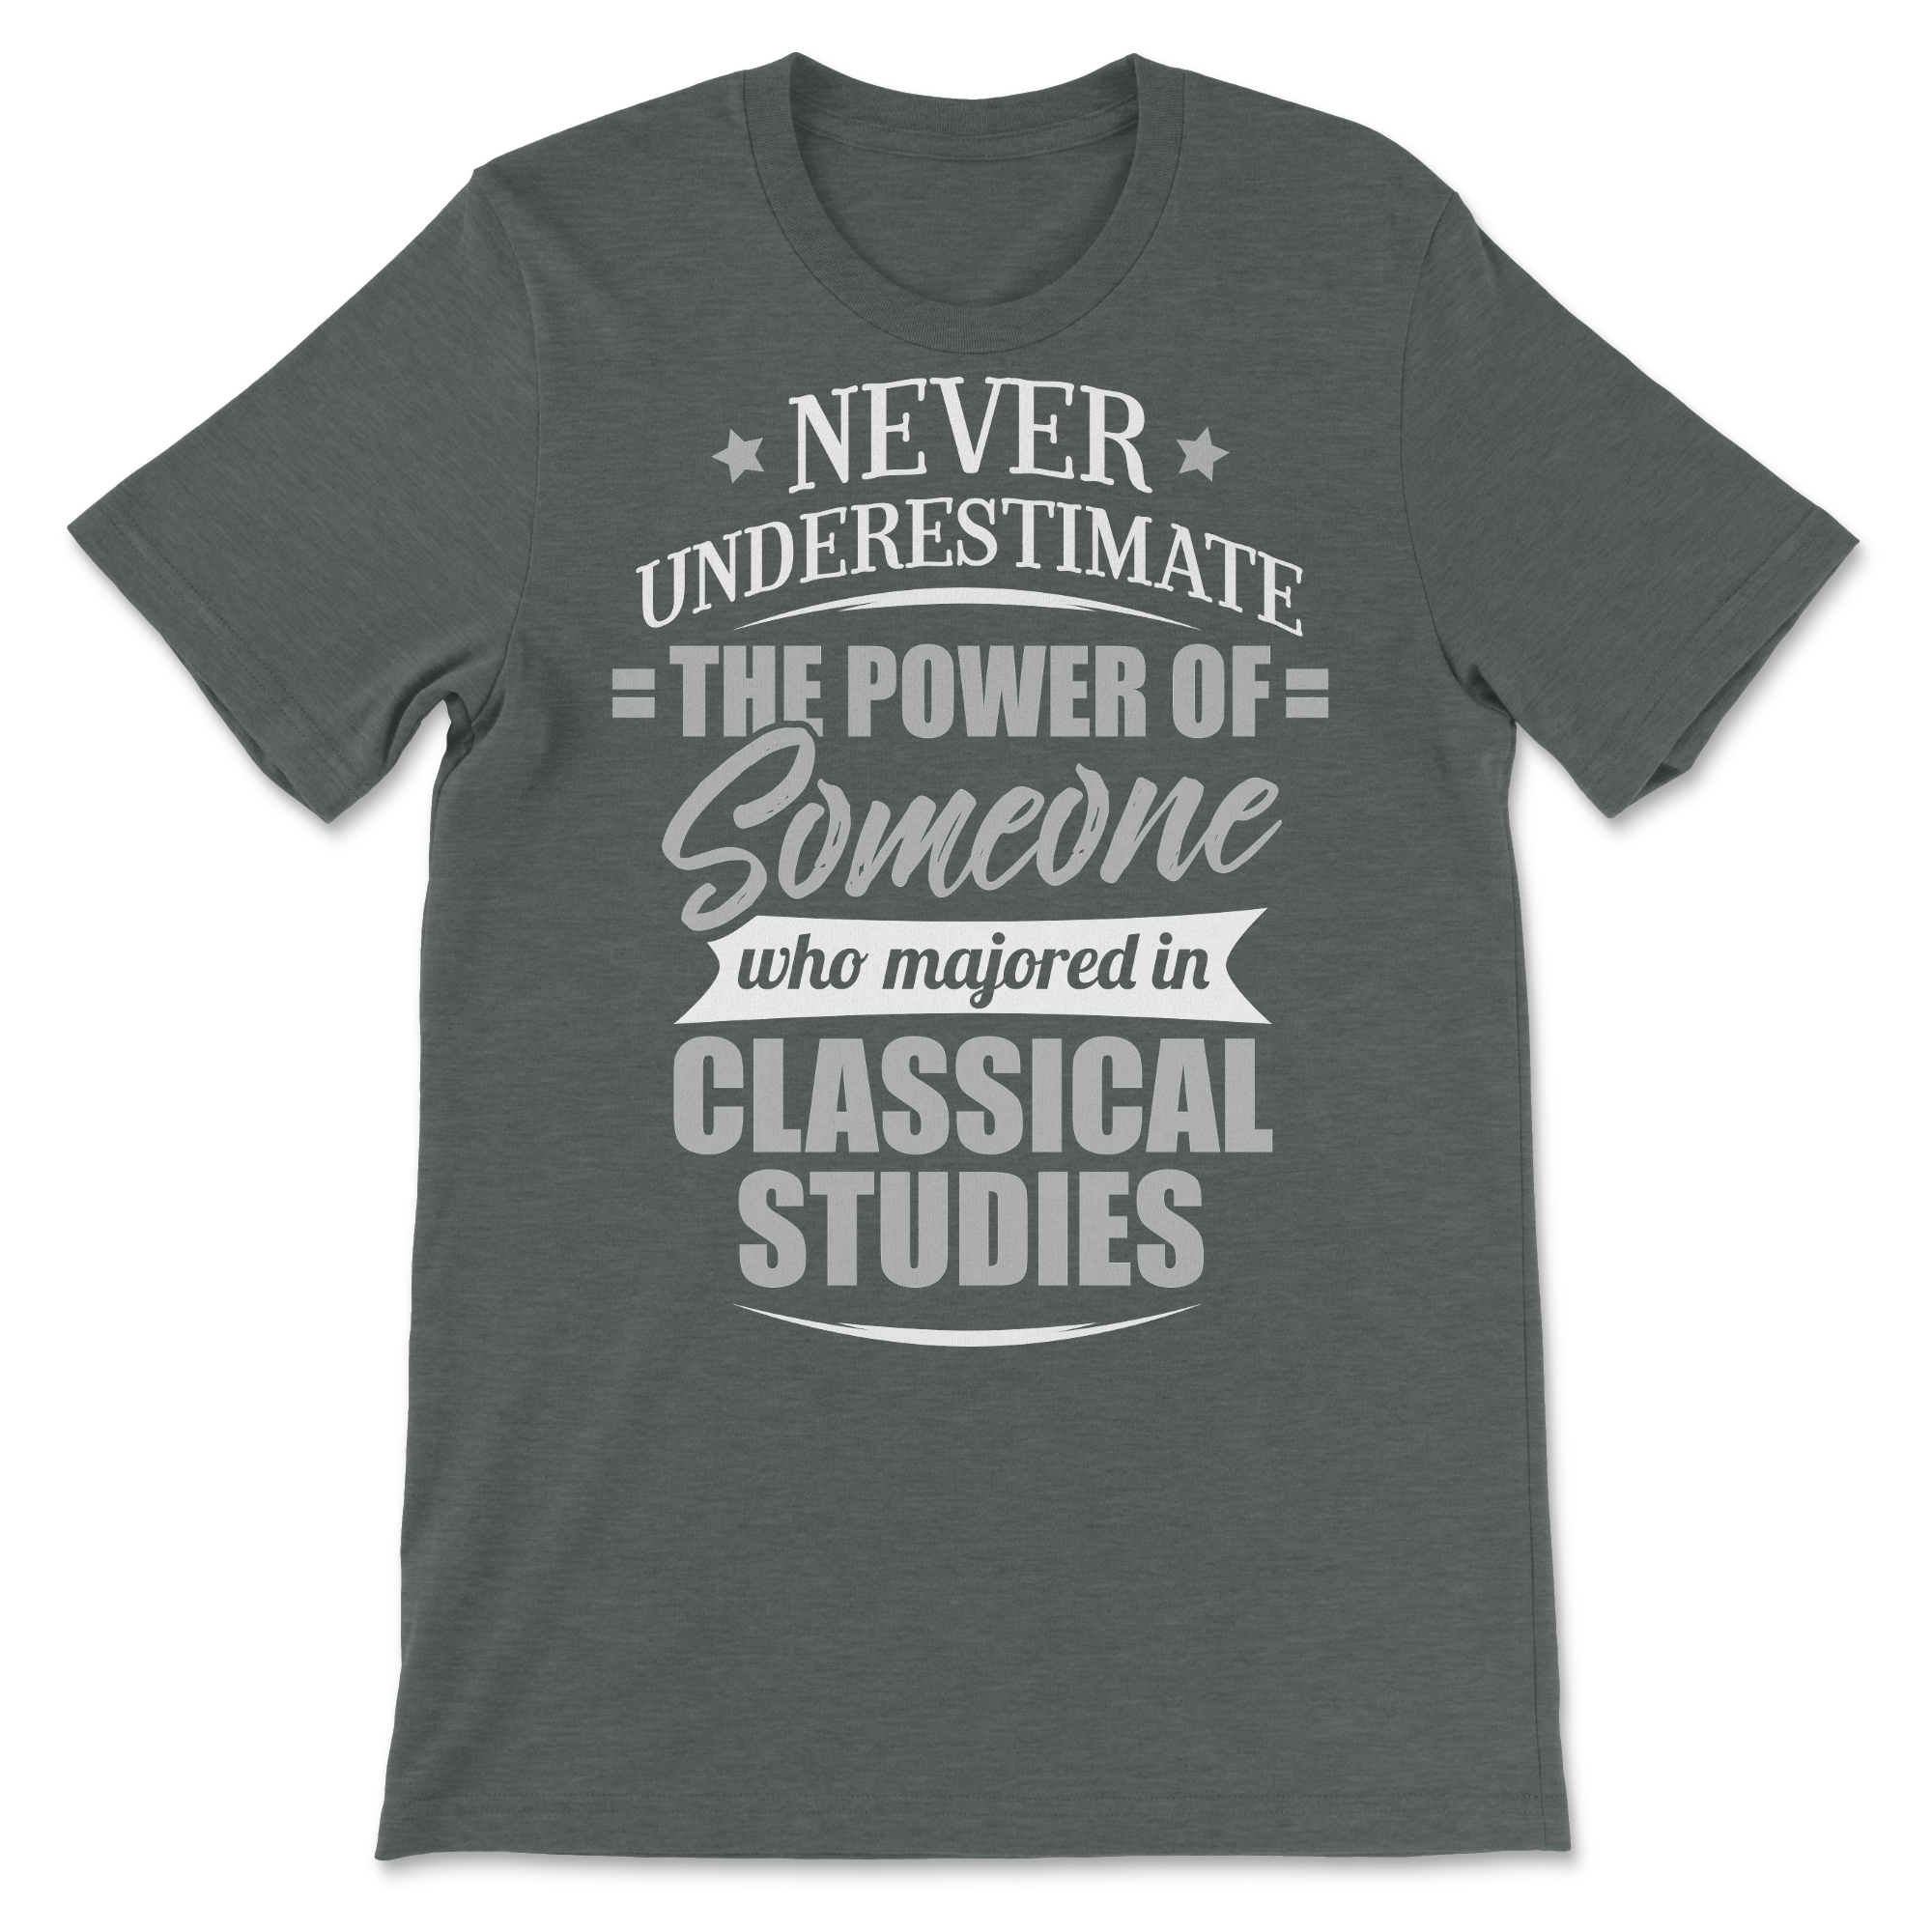 Classical Studies Shirt for Men & Women - Never Underestimat - image 1 of 8